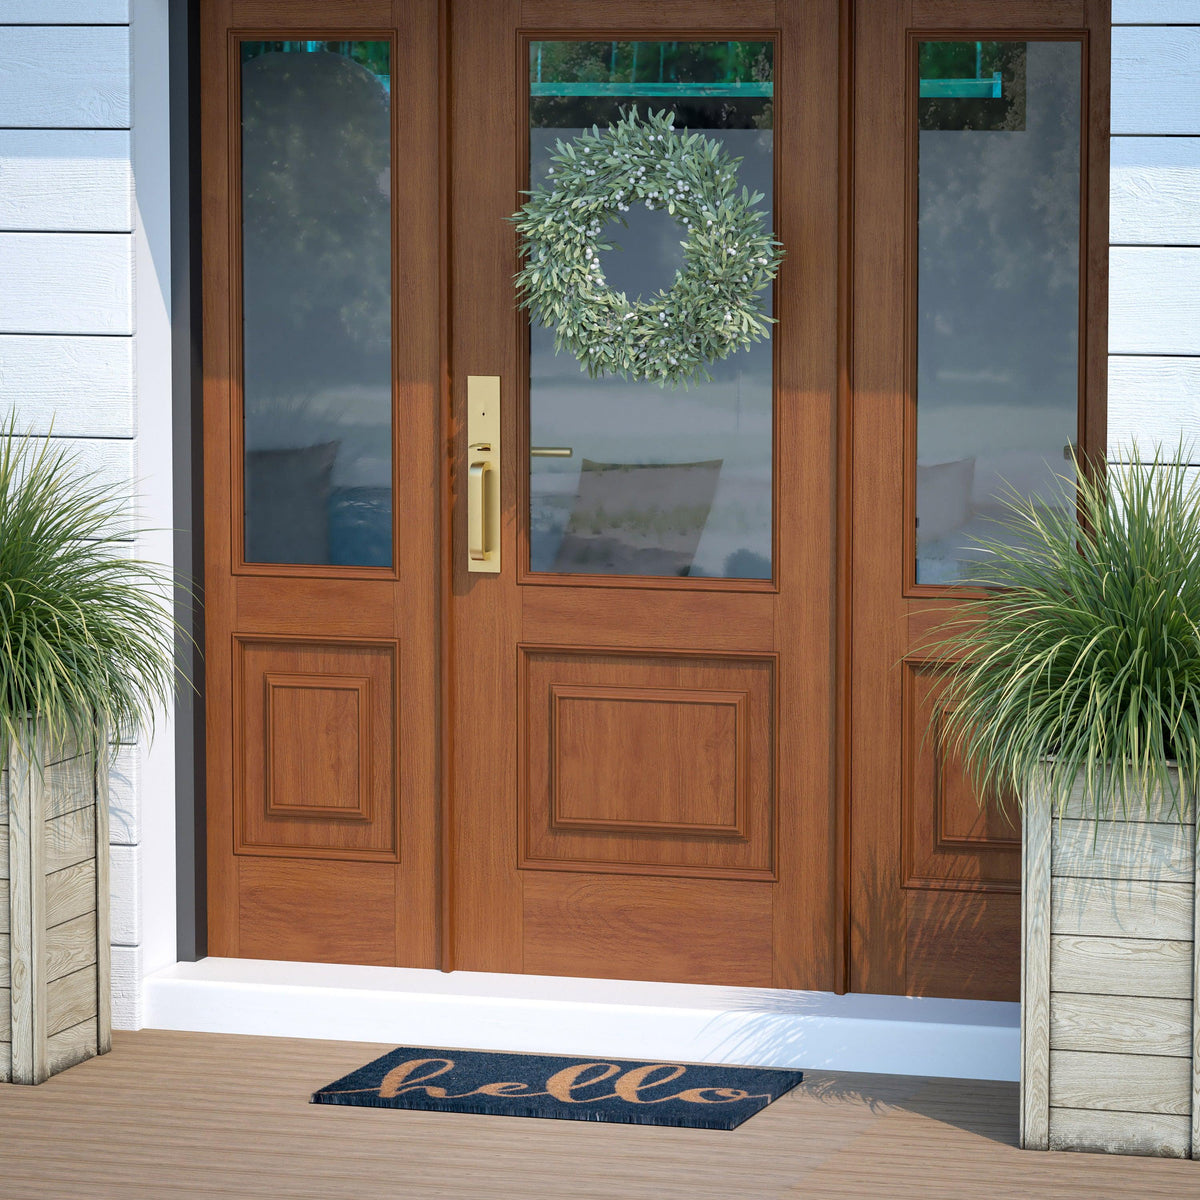 Navy |#| Indoor/Outdoor Coir Doormat with Hello Message and Non-Slip Back-Navy/Natural